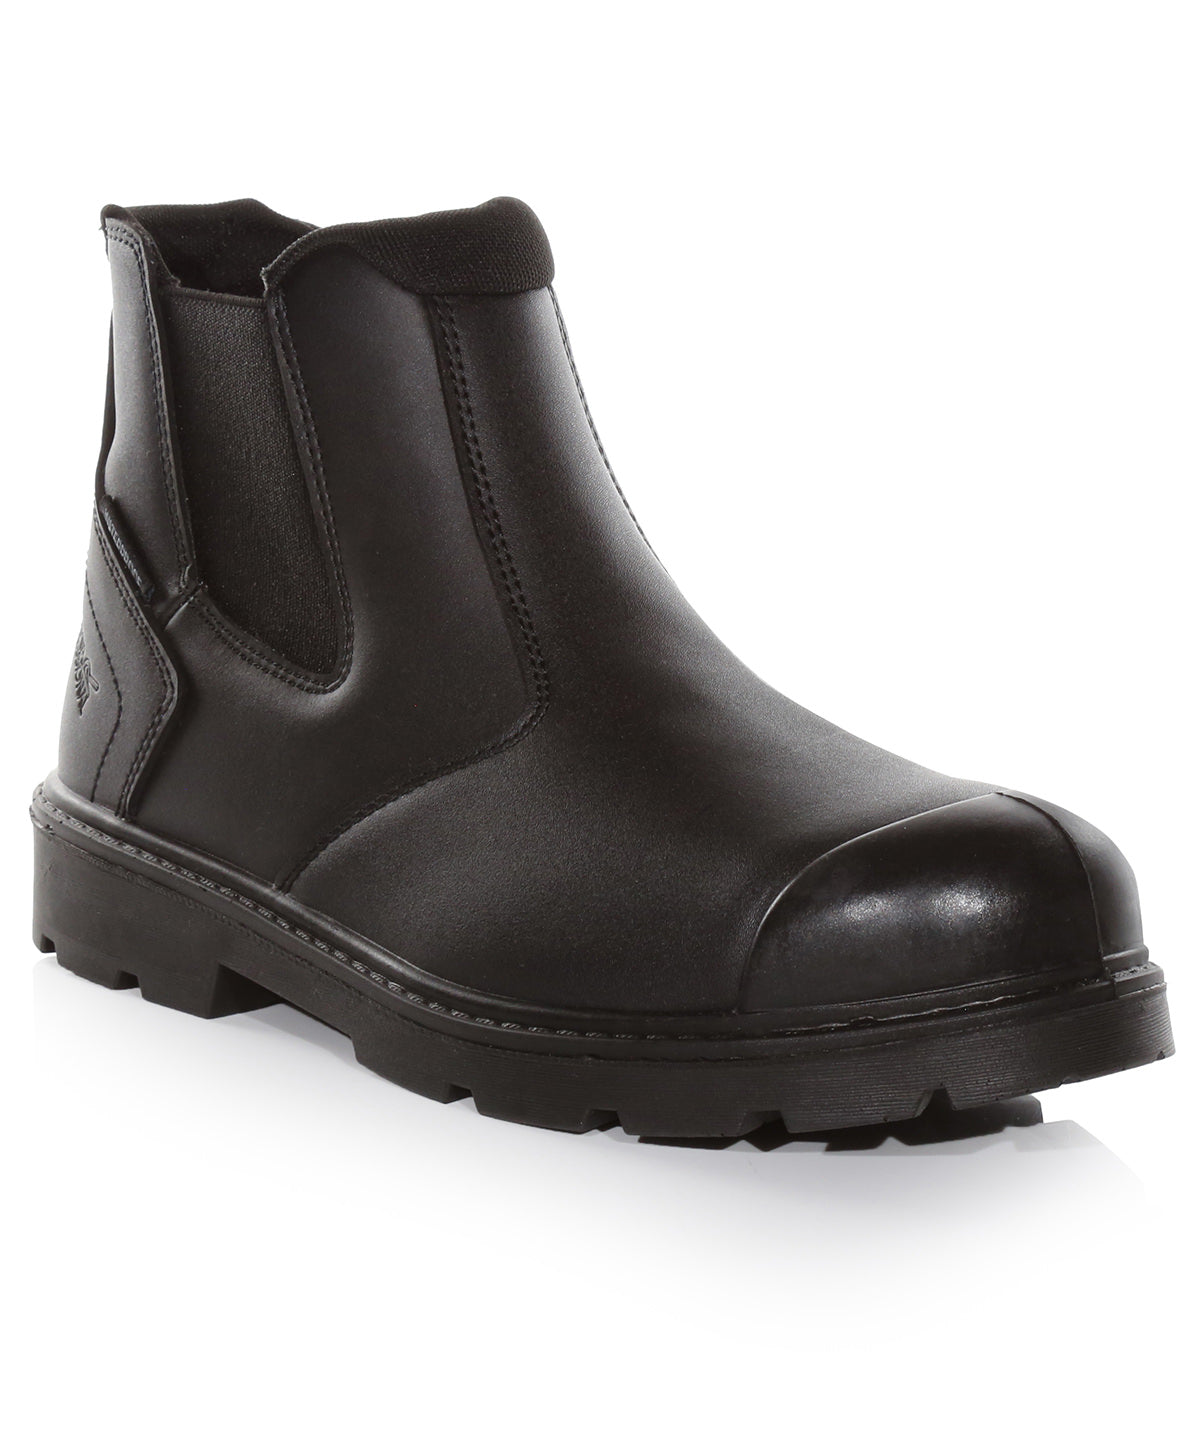 Regatta Waterproof S3 Dealer boots